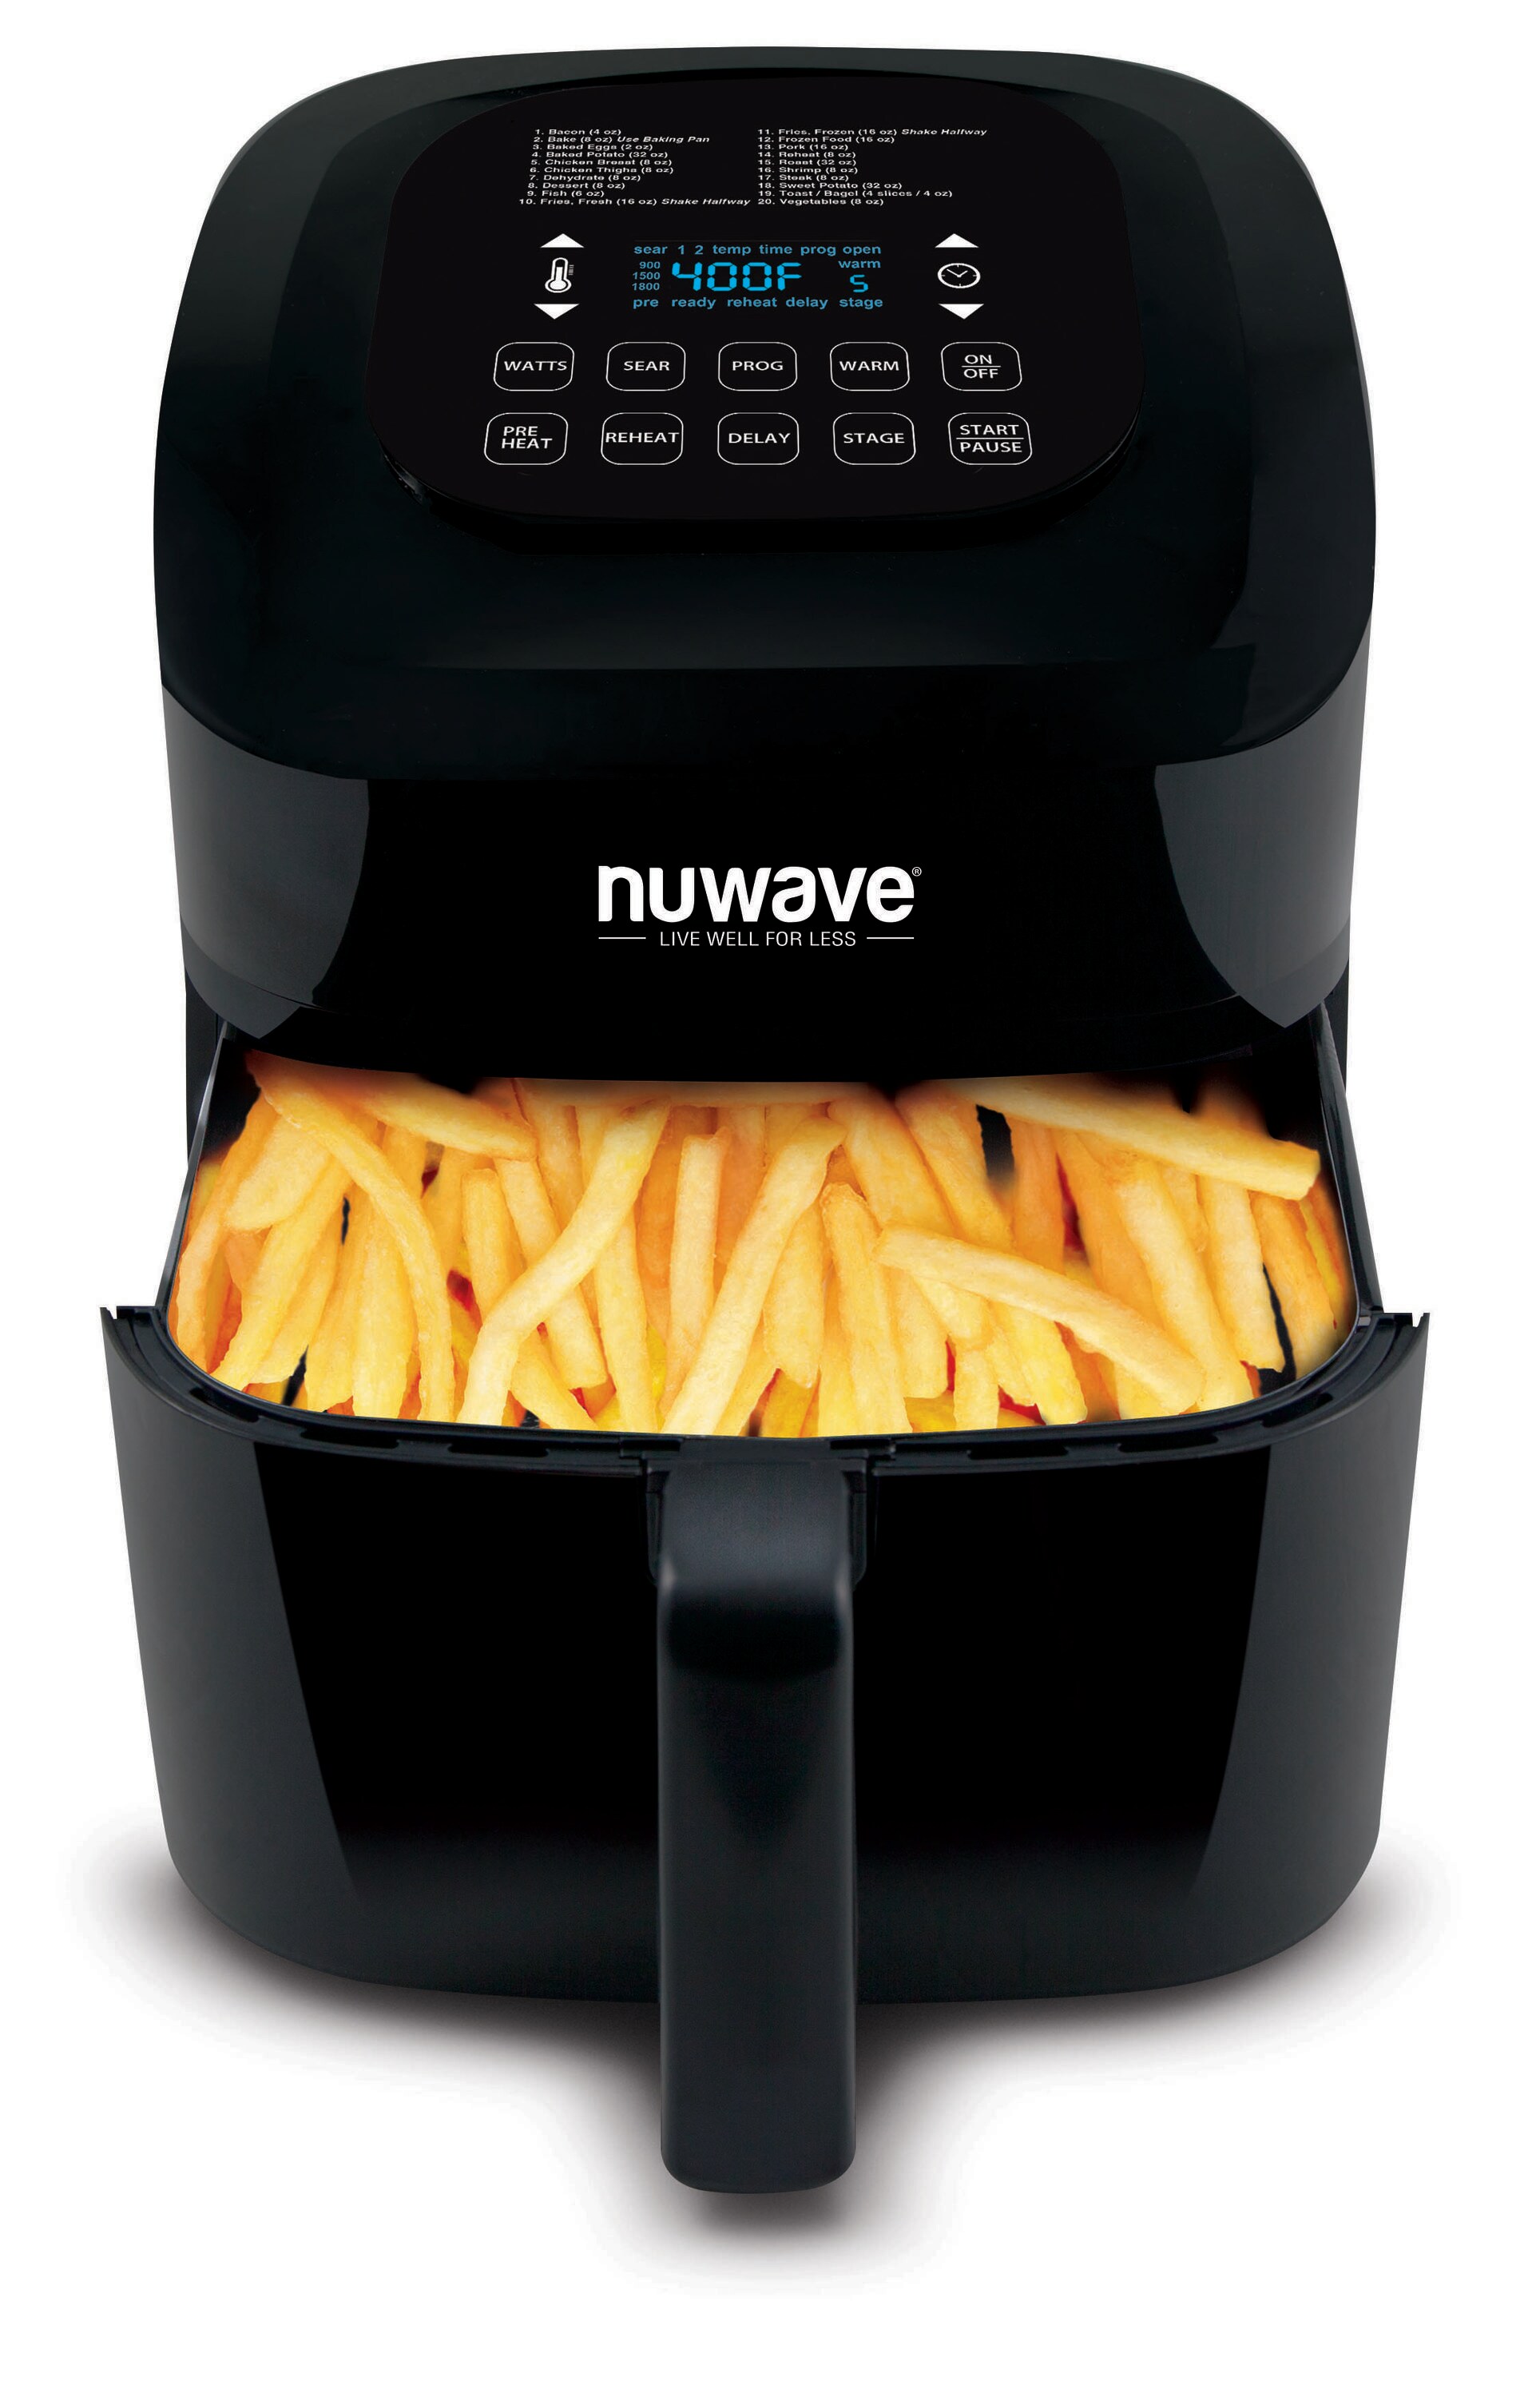 Nuwave Brio 10 Qt. Digital Air Fryer, Fryers, Furniture & Appliances